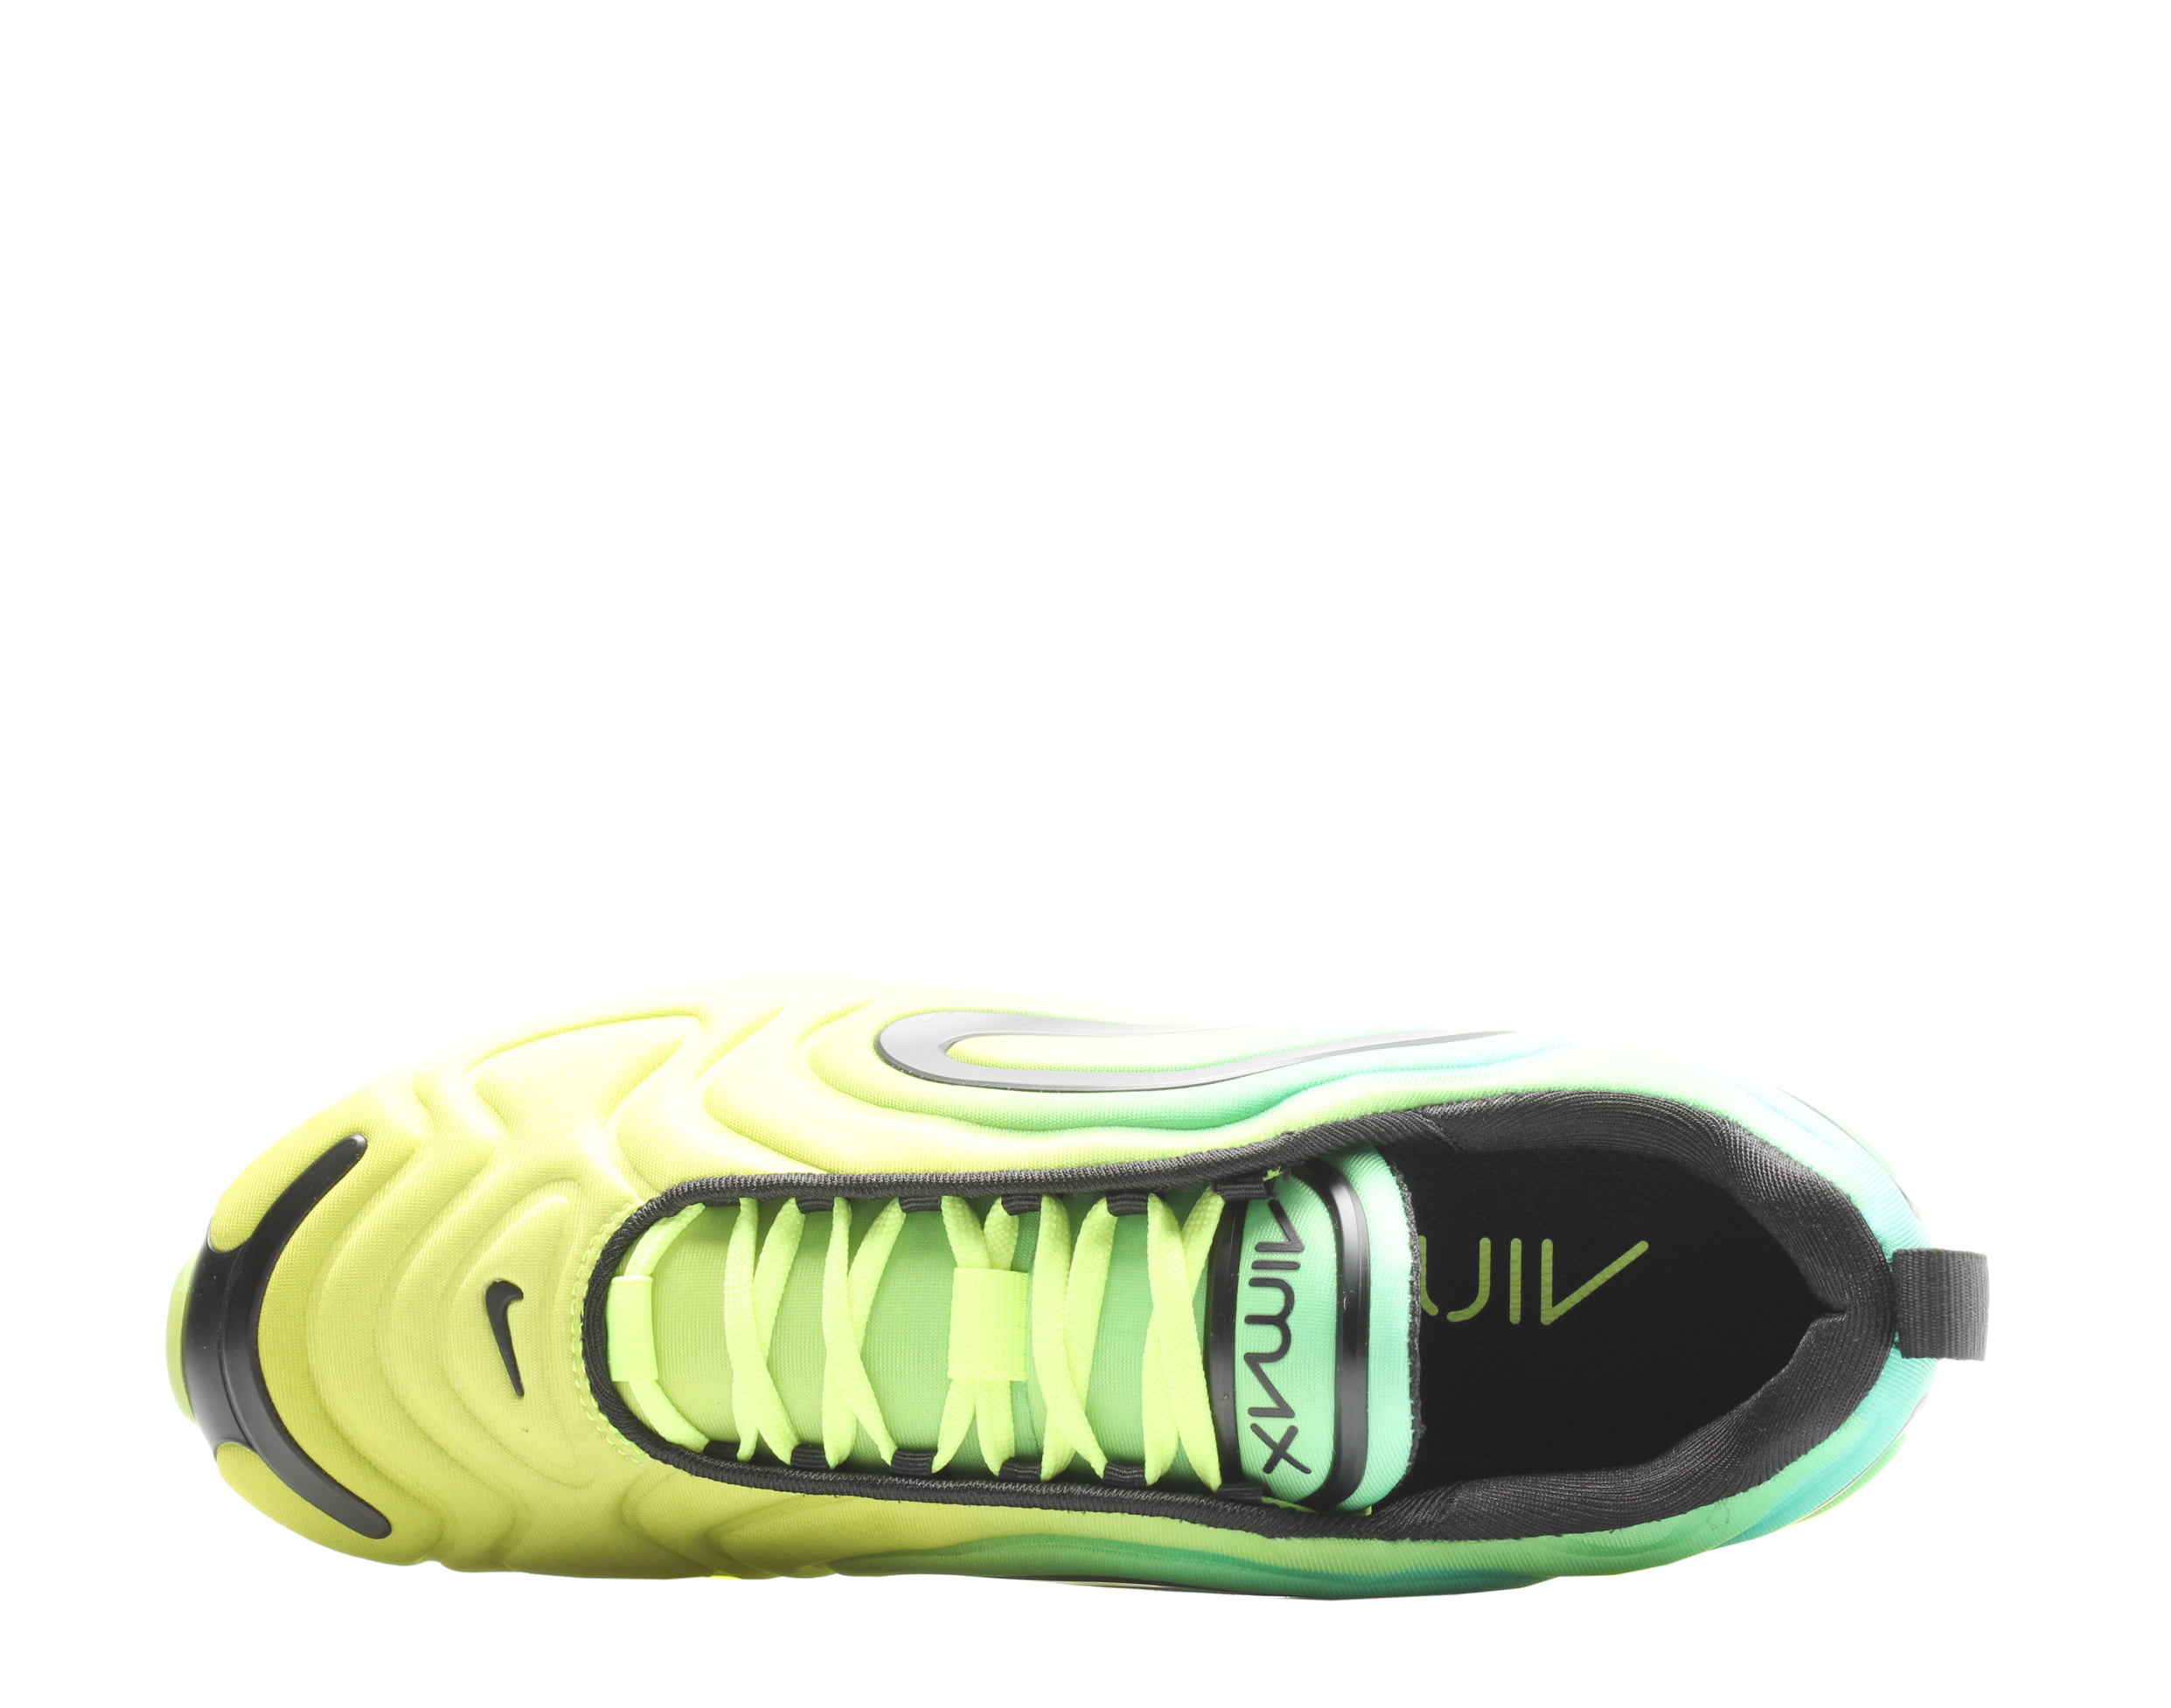 Nike Air Max 720 Volt/Black Men's Lifestyle Shoes AO2924-701 -